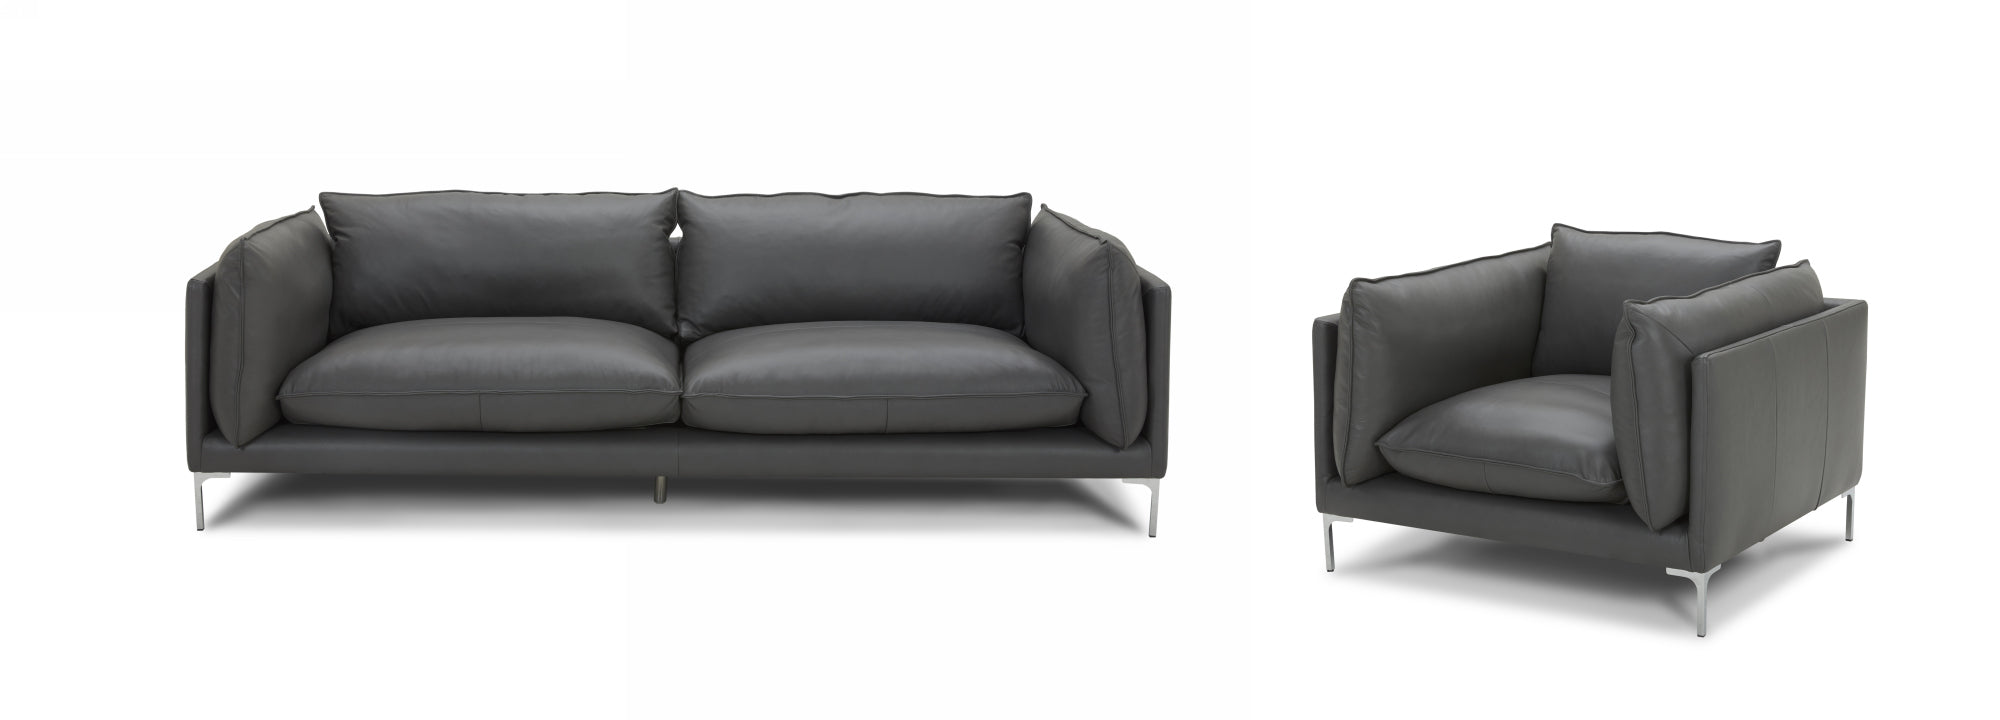 Divani Casa Harvest - Modern Full Leather Sofa-Sofa-VIG-Wall2Wall Furnishings